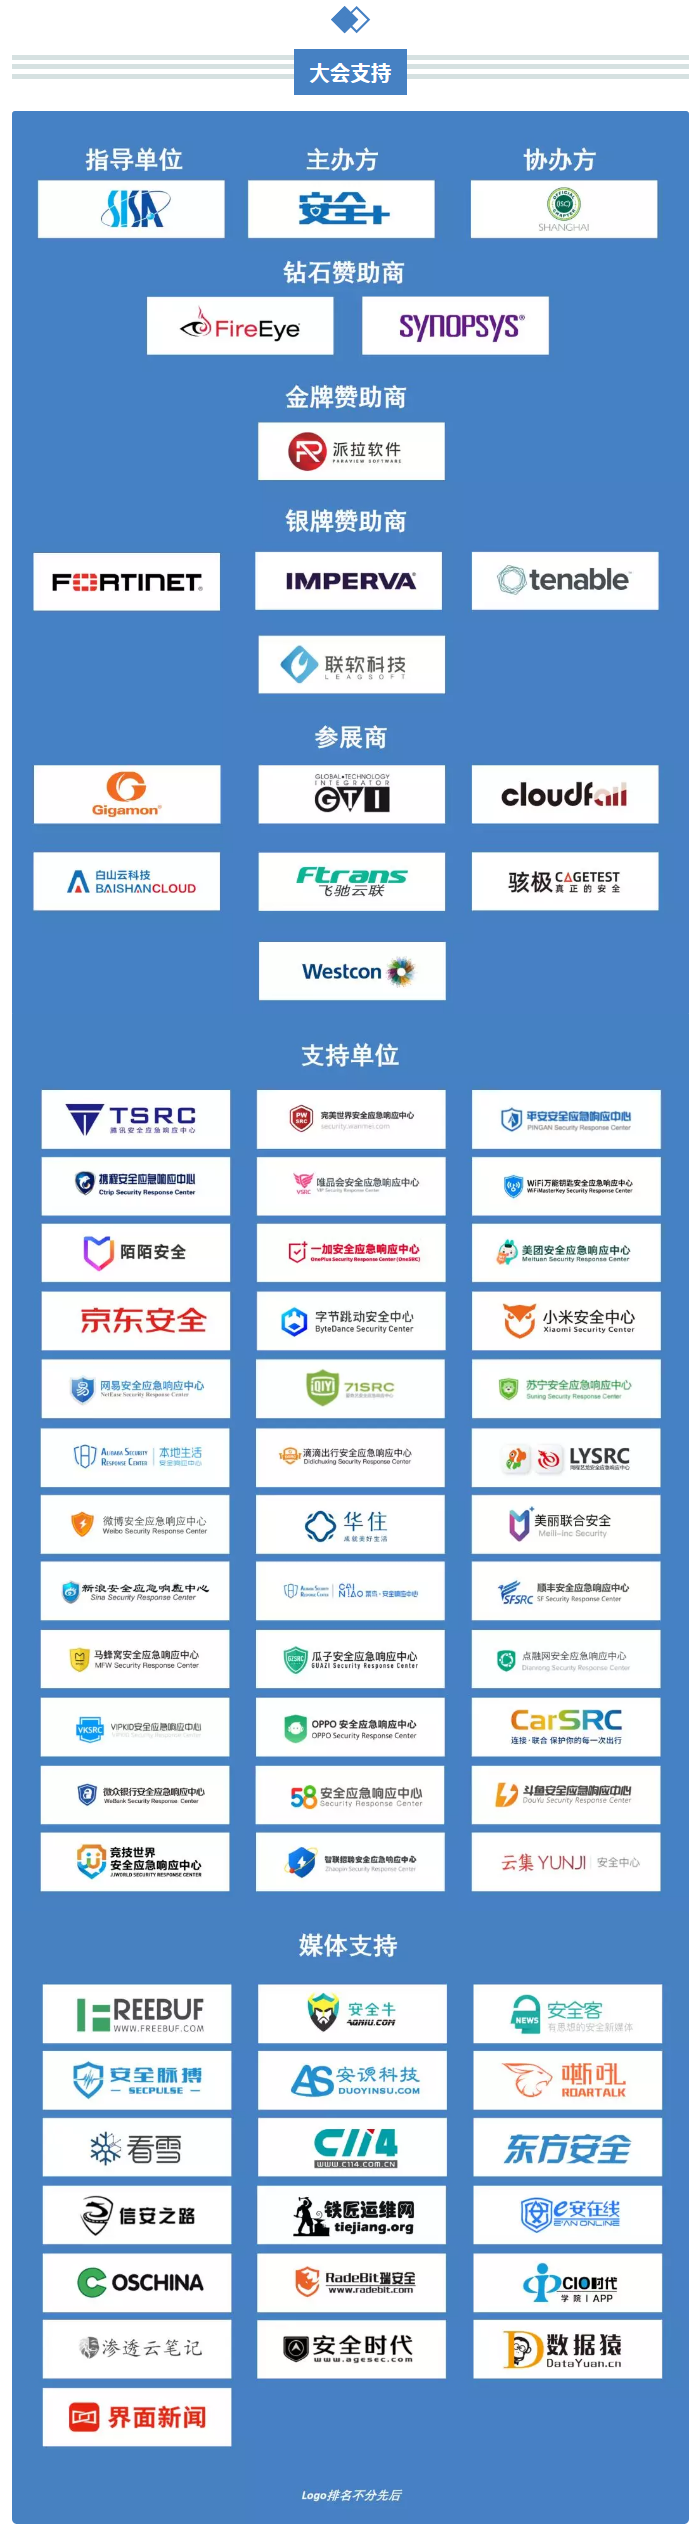 EISS-2019企业信息安全峰会之上海站